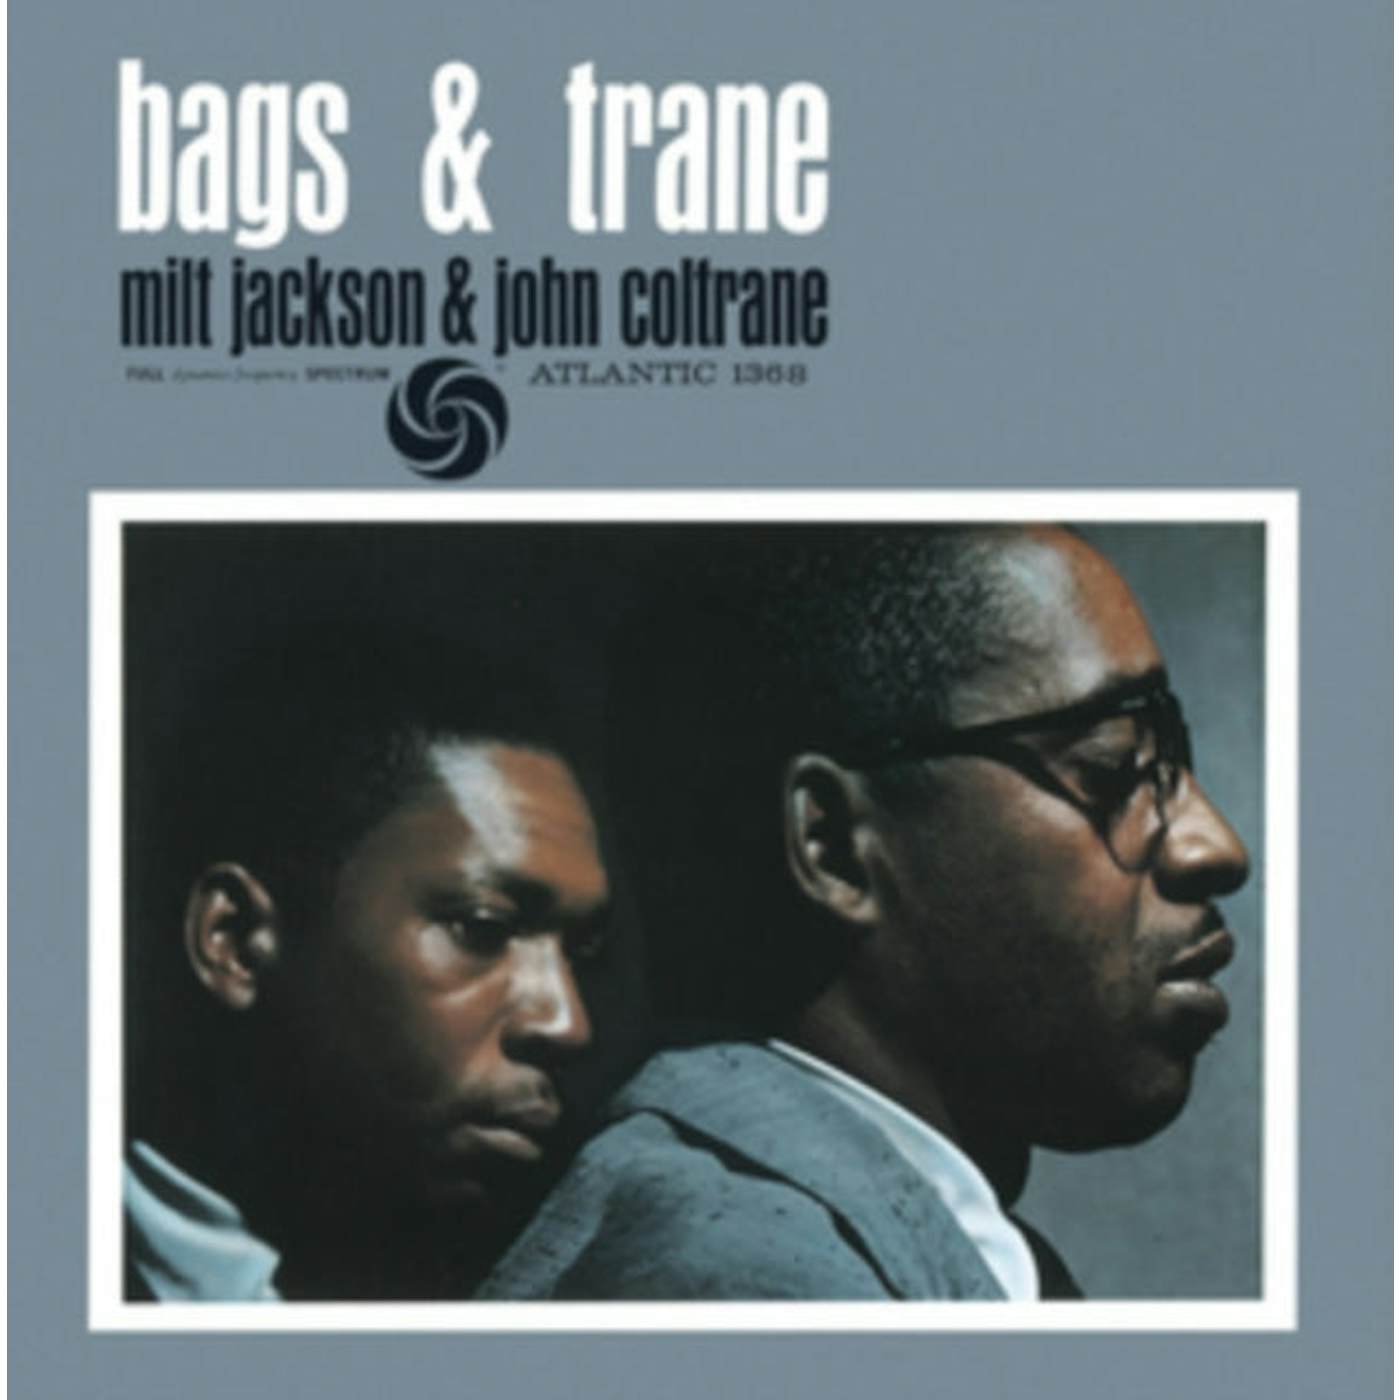 John Coltrane & Milt Jackson CD - Bags & Trane